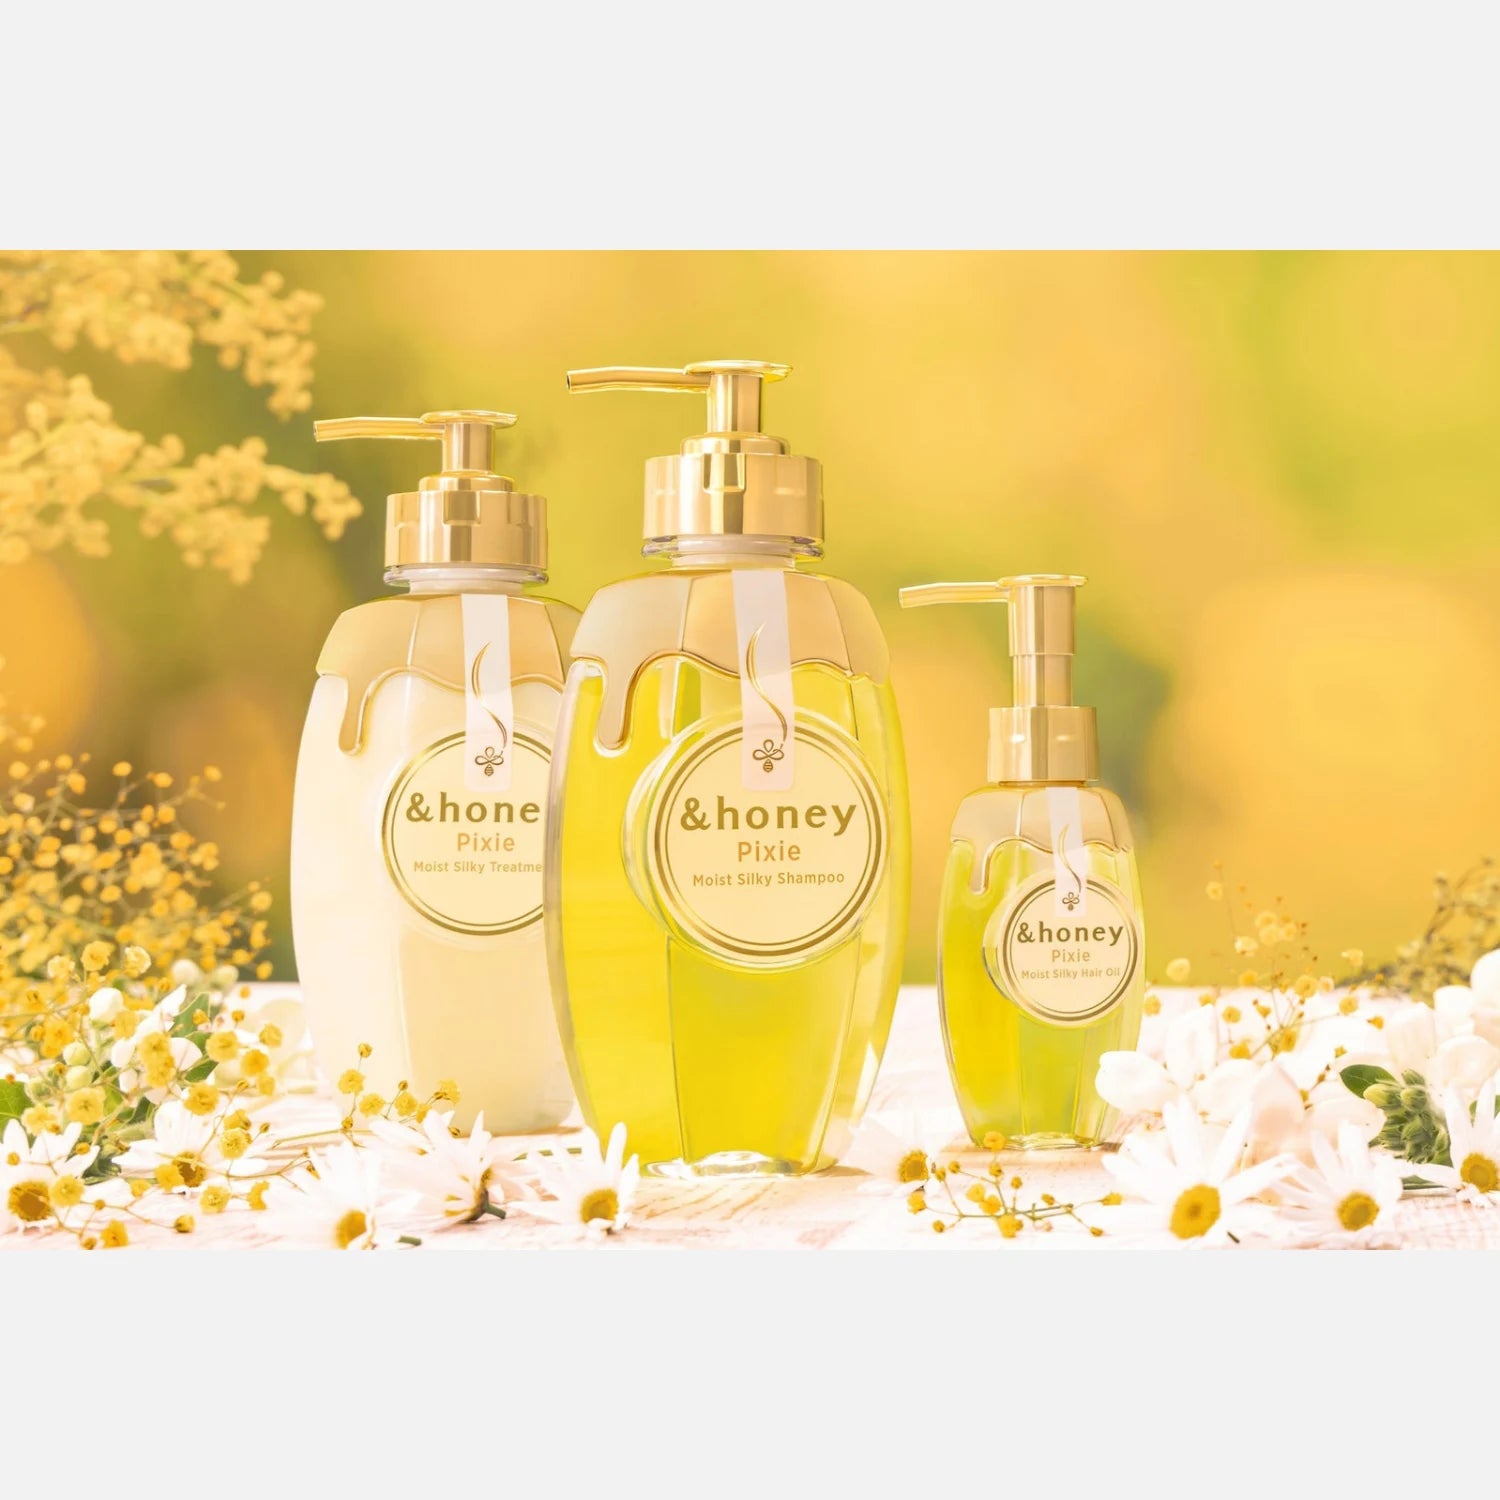  Honey Pixie Moist Silky Shampoo & Treatment Set 440ml Each - Buy Me Japan